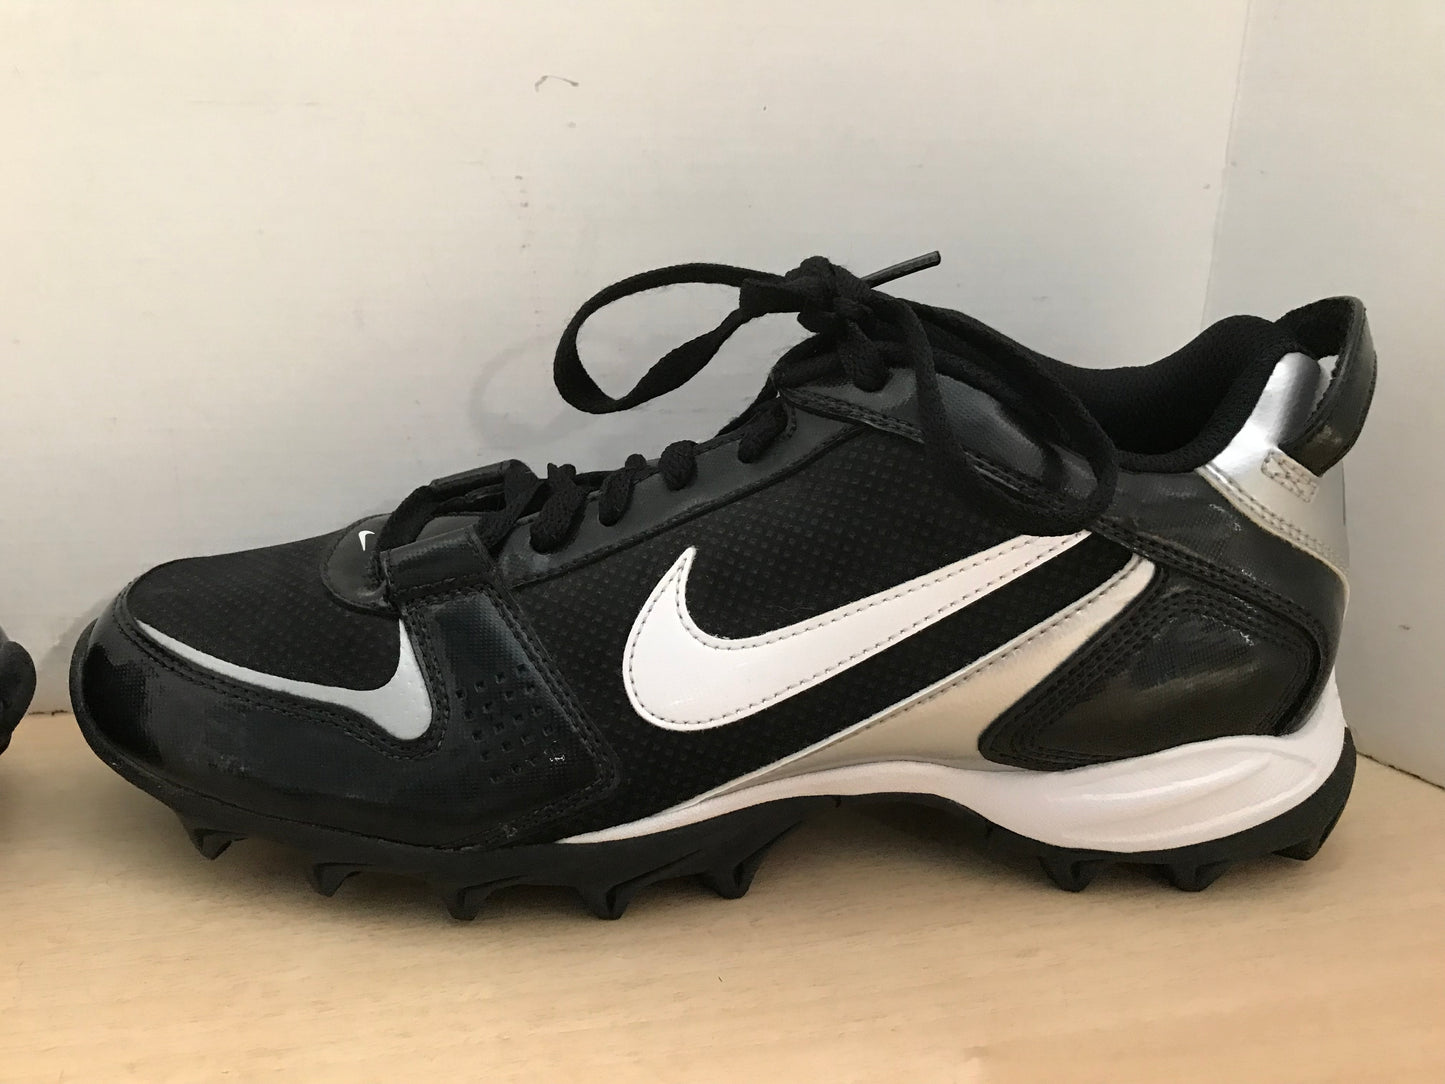 Baseball Shoes Cleats Men's Size 11 Nike Shark As New Black White